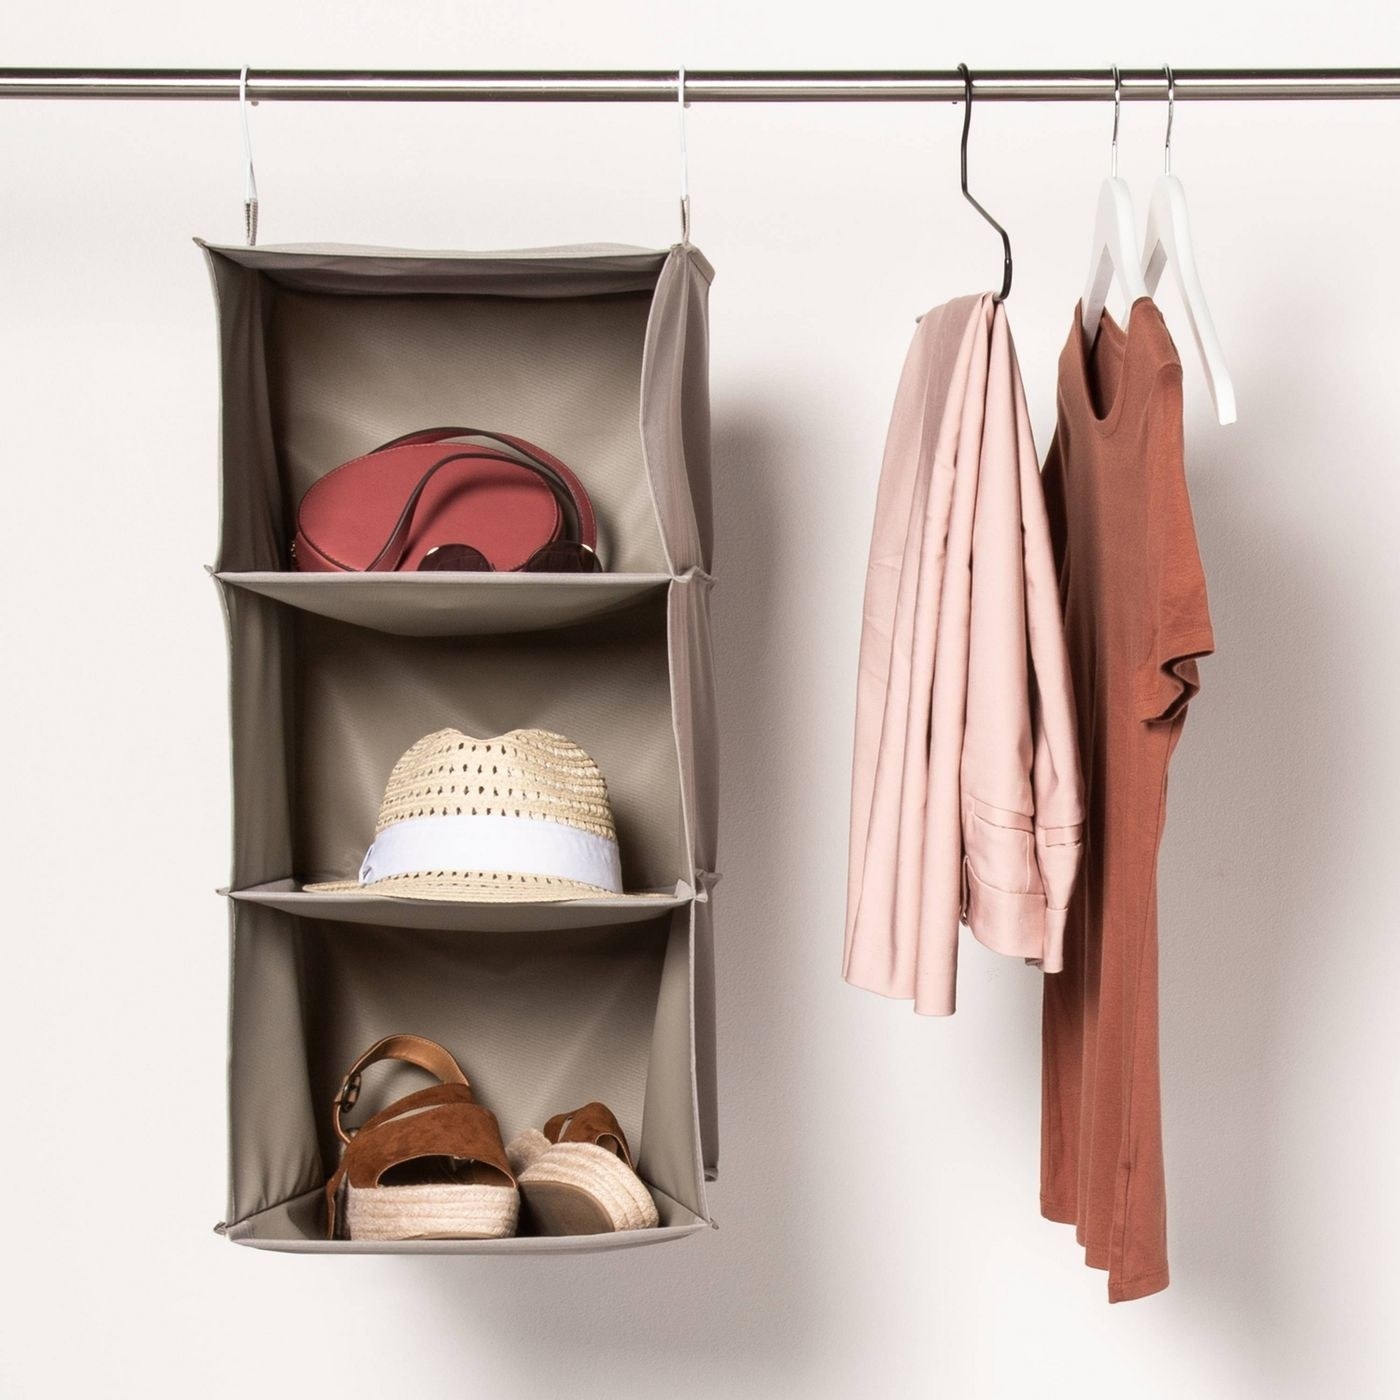 A three shelf hanging closet organizer with clothes on it